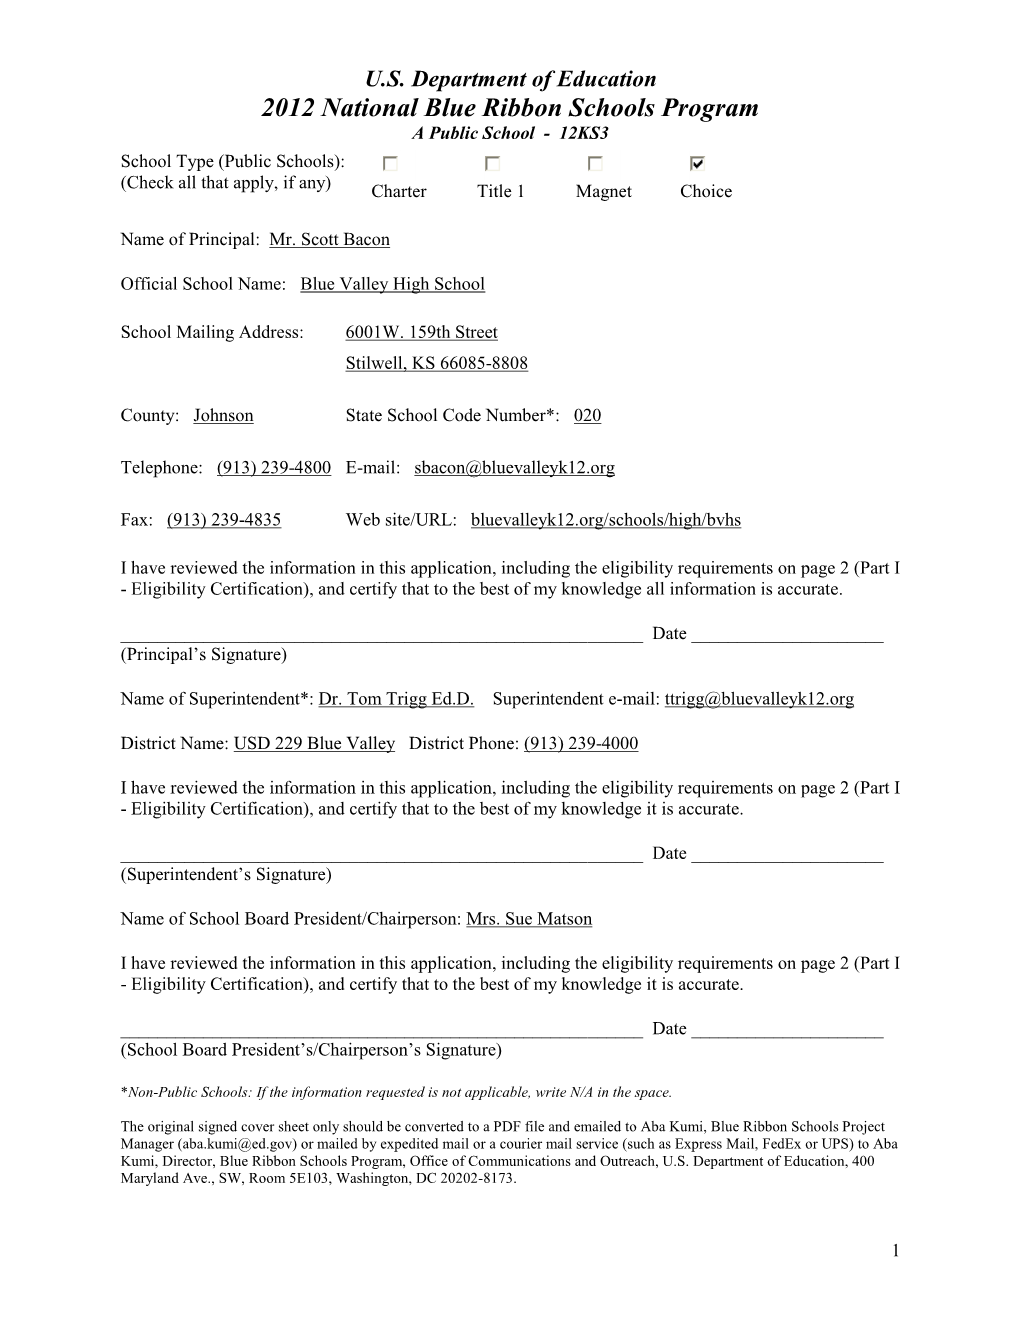 Blue Valley High School's Application for the 2012 National Blue Ribbon School Program -- September 2012 (PDF)